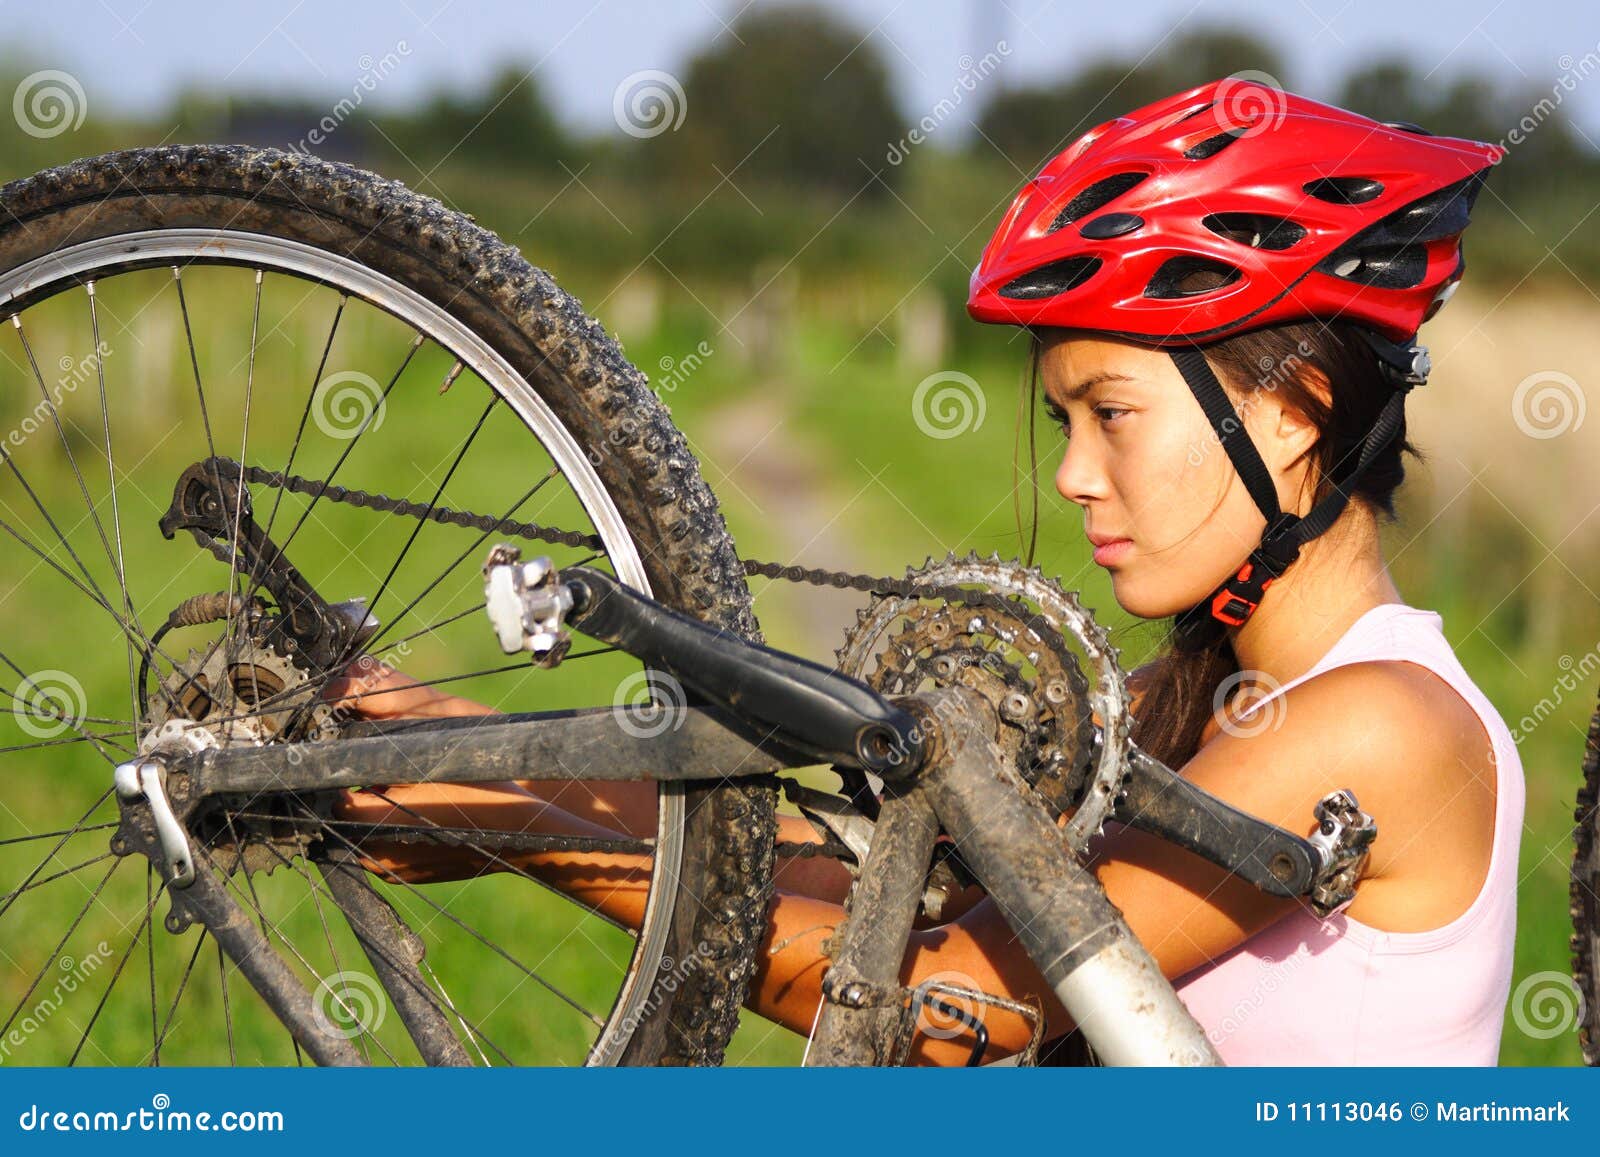 Mountain bike repair stock photo. Image of bicycling - 11113046